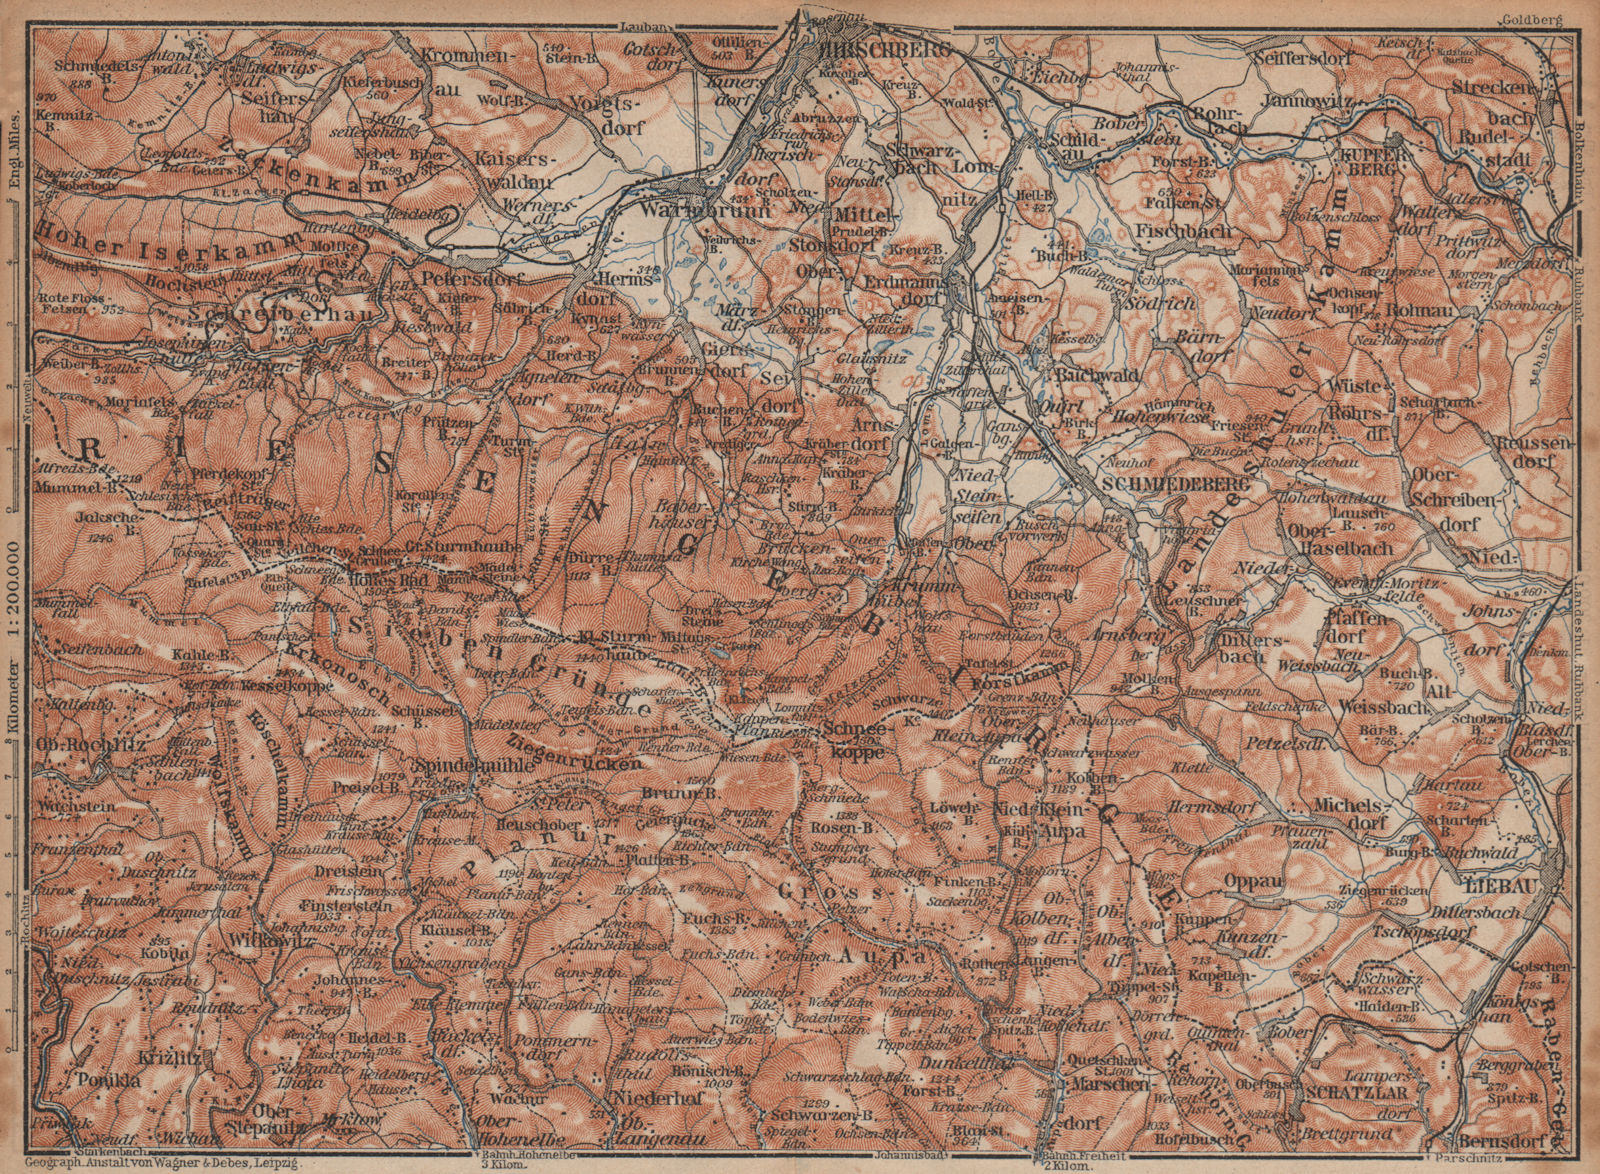 Associate Product KARKONOSZE KRKONOŠE MOUNTAINS. Jelenia Gora Cieplice Lubawka Czech Rep 1904 map